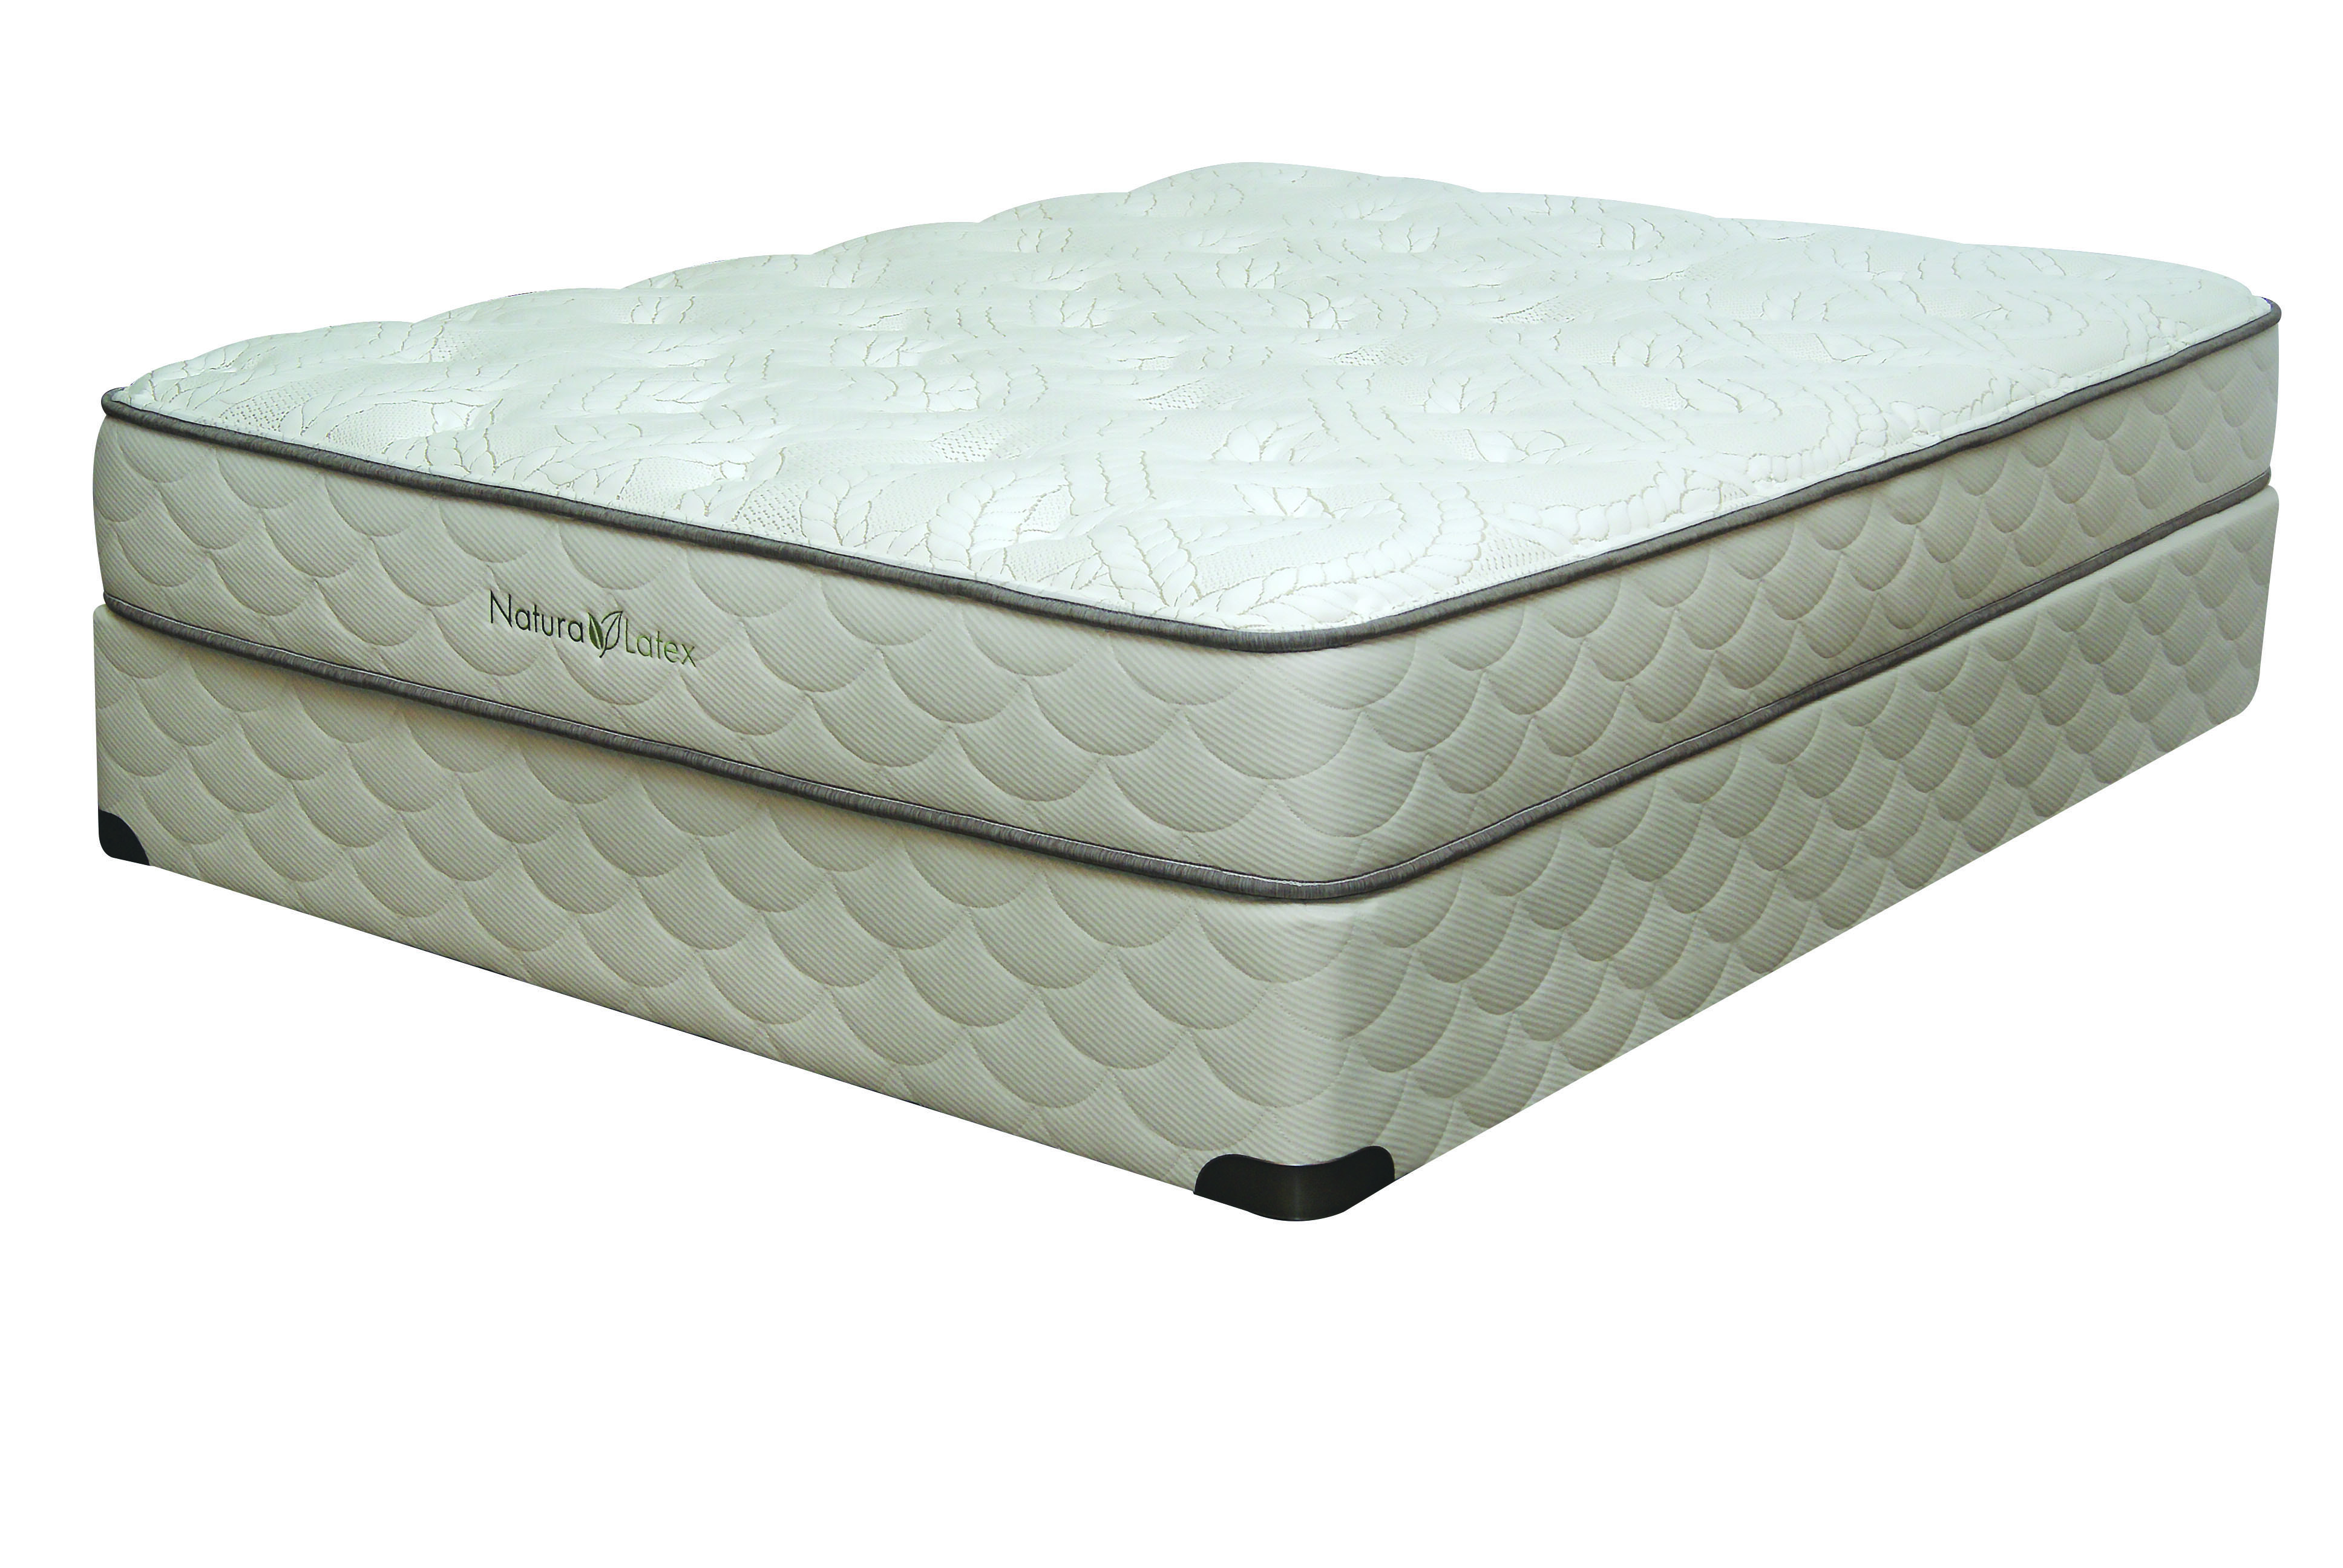 firm latex mattress topper canada